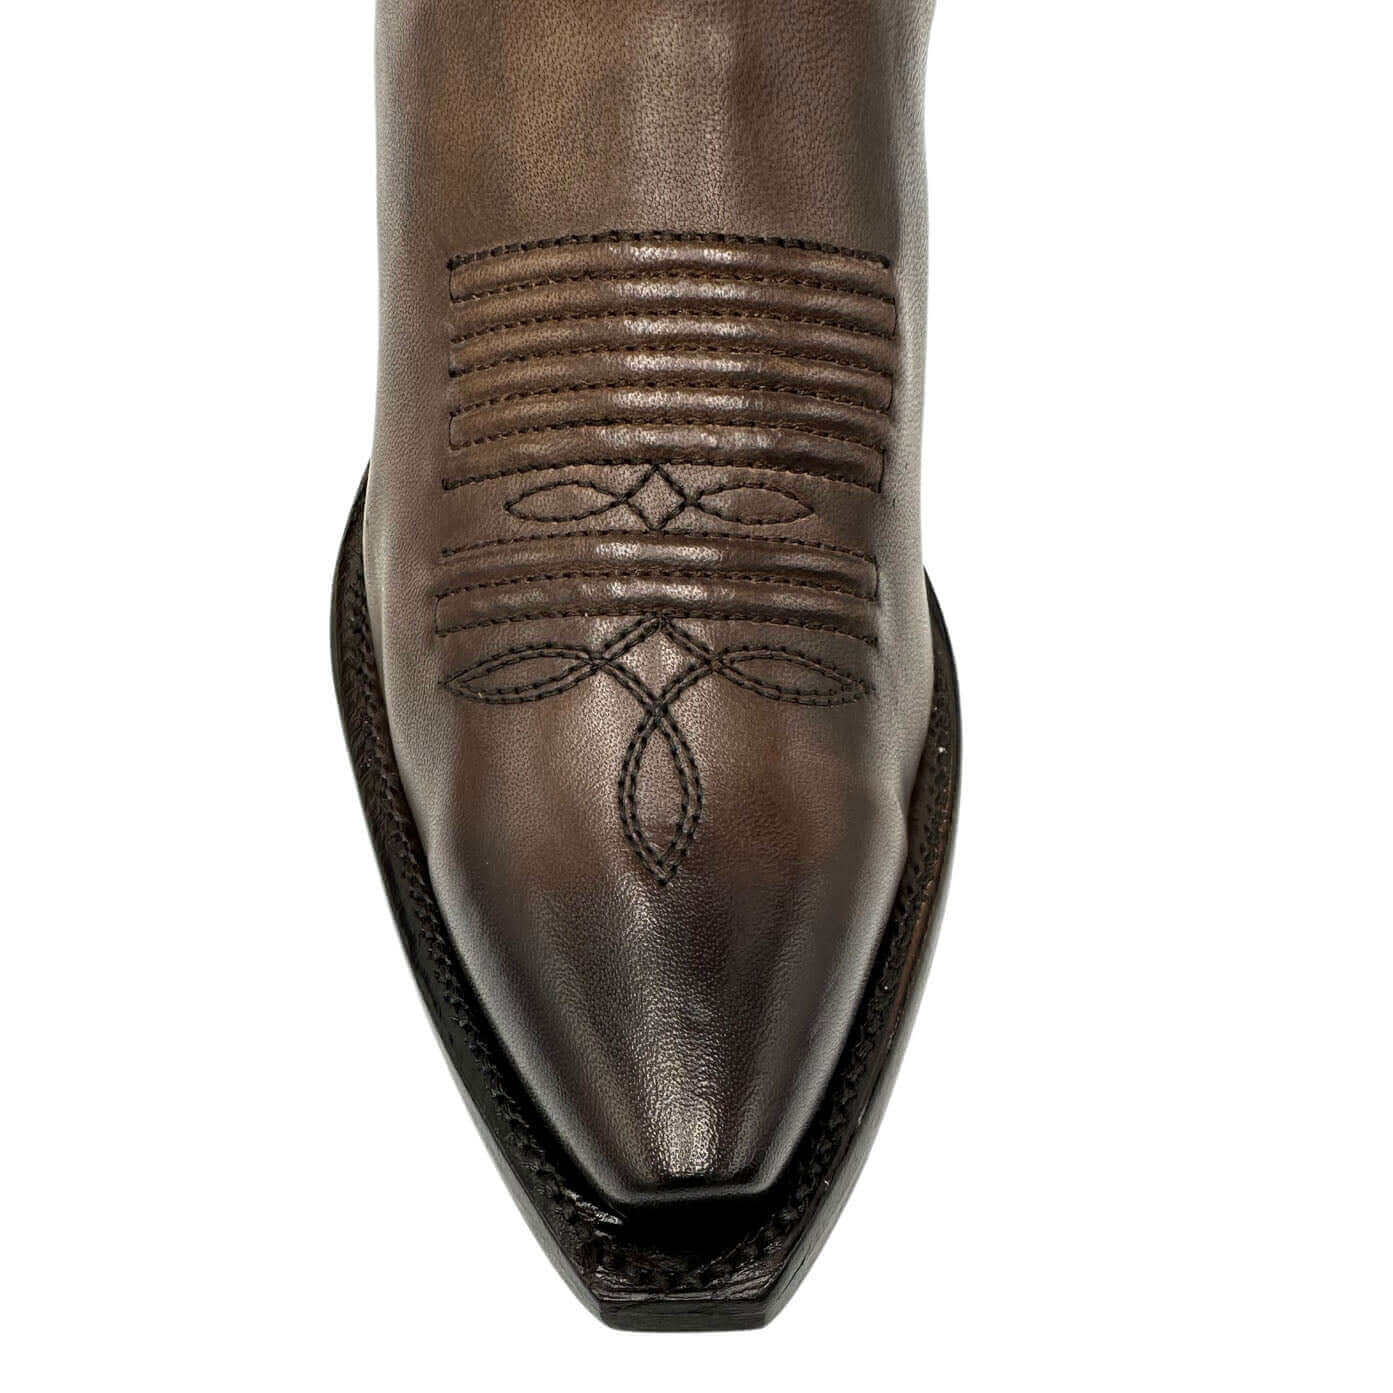 Women's Vaccari Red Bottom Snip Toe Boots – Vaccari Boots